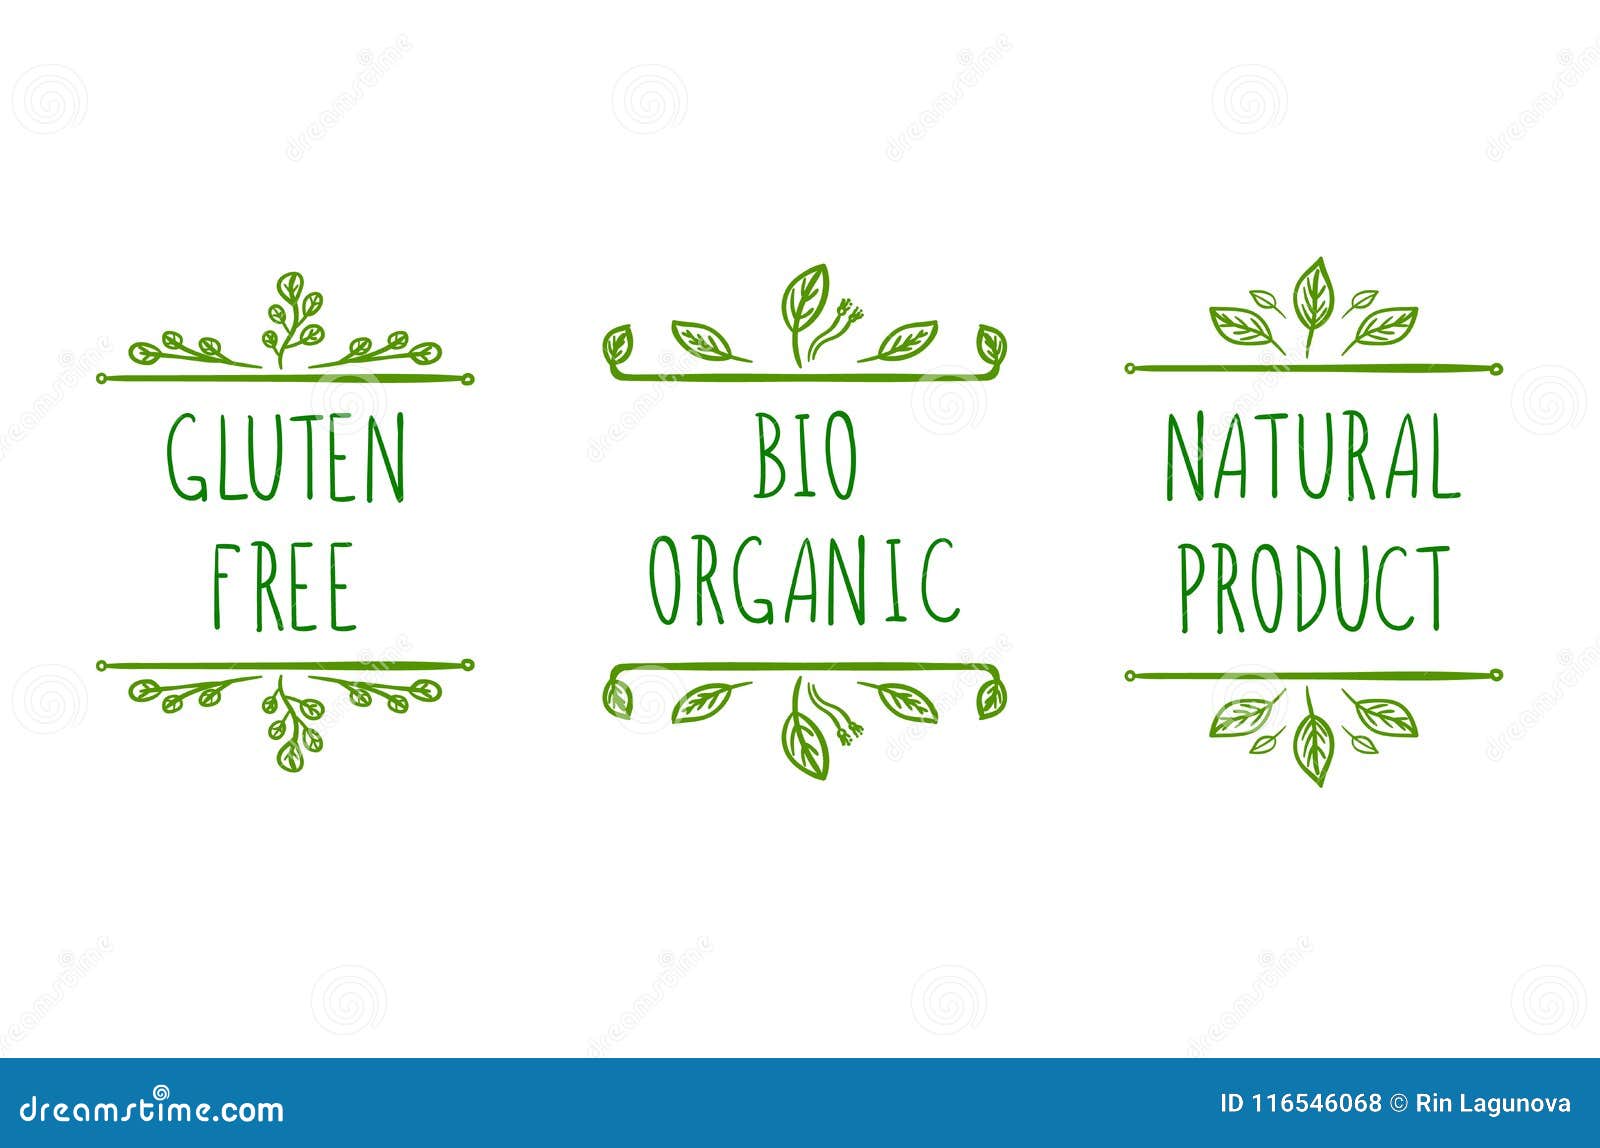 Heathy Food Icons Gluten Free Natural Product Bio Organic Handwritten Words Green Doodle Labels Template Stock Vector Illustration Of Flourish Handwritten 116546068